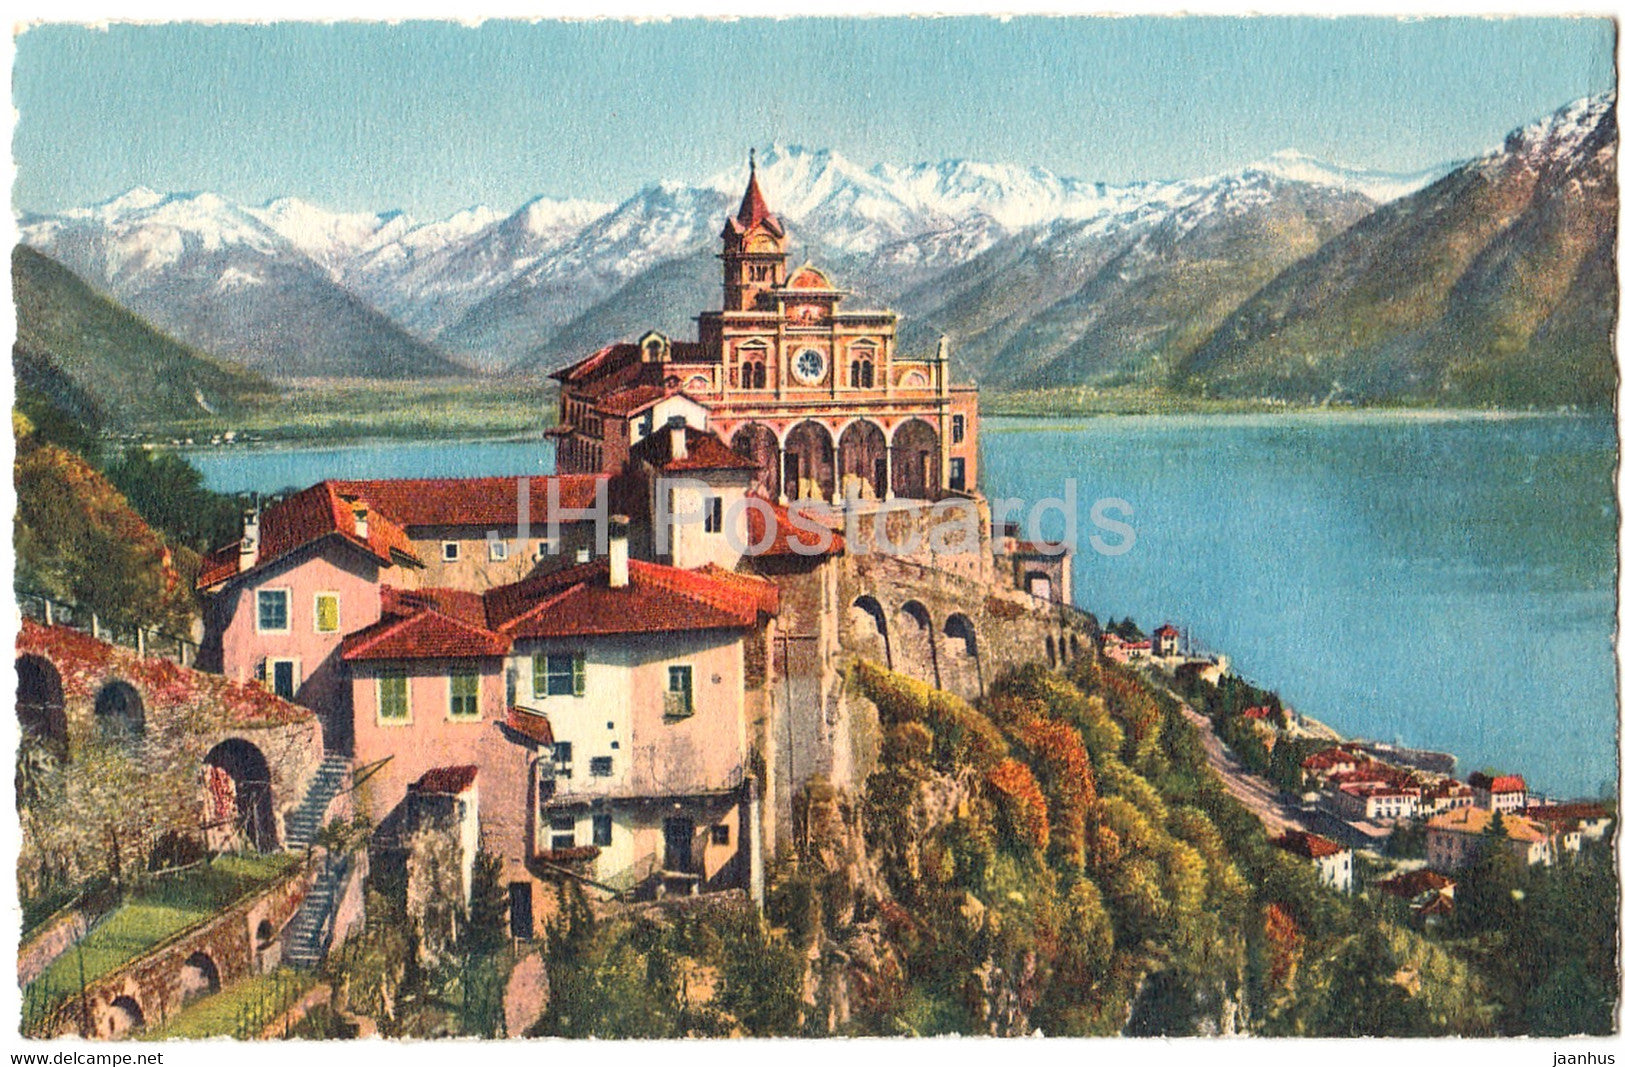 Locarno - Madonna del Sasso - 3767 - old postcard - Switzerland - unused - JH Postcards